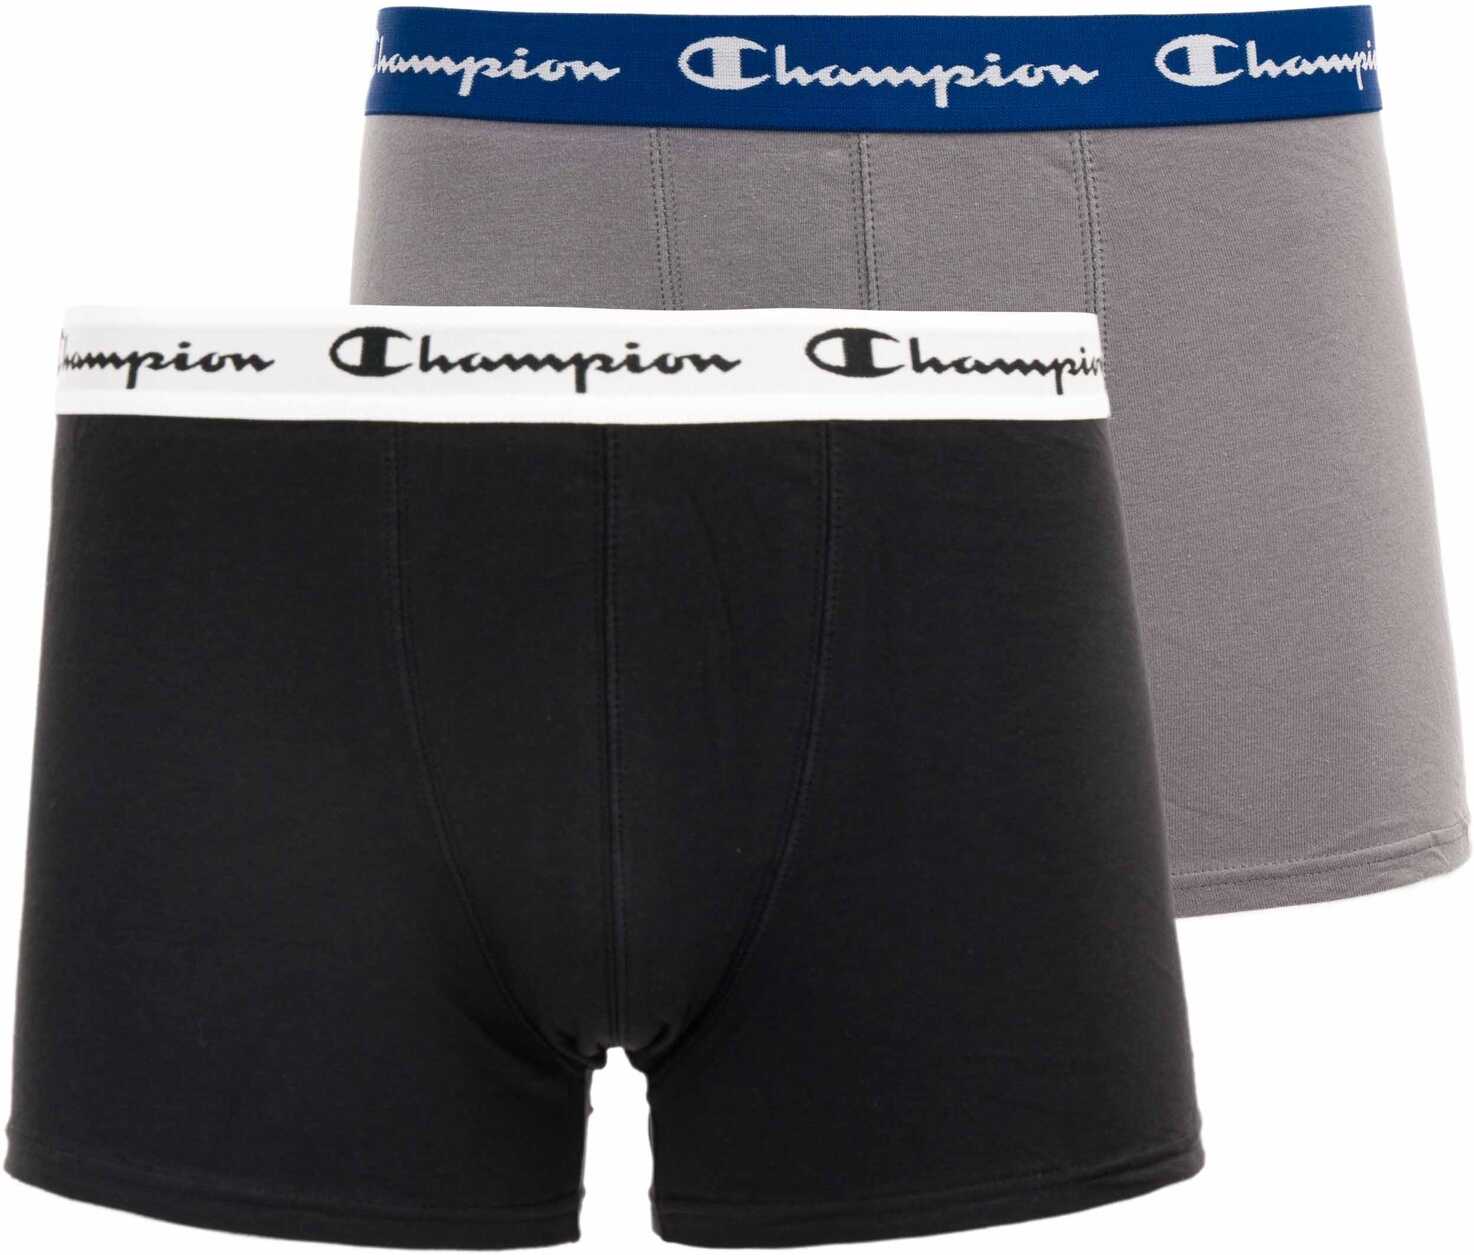 Champion 2-Pack Boxer Shorts Black/Grey